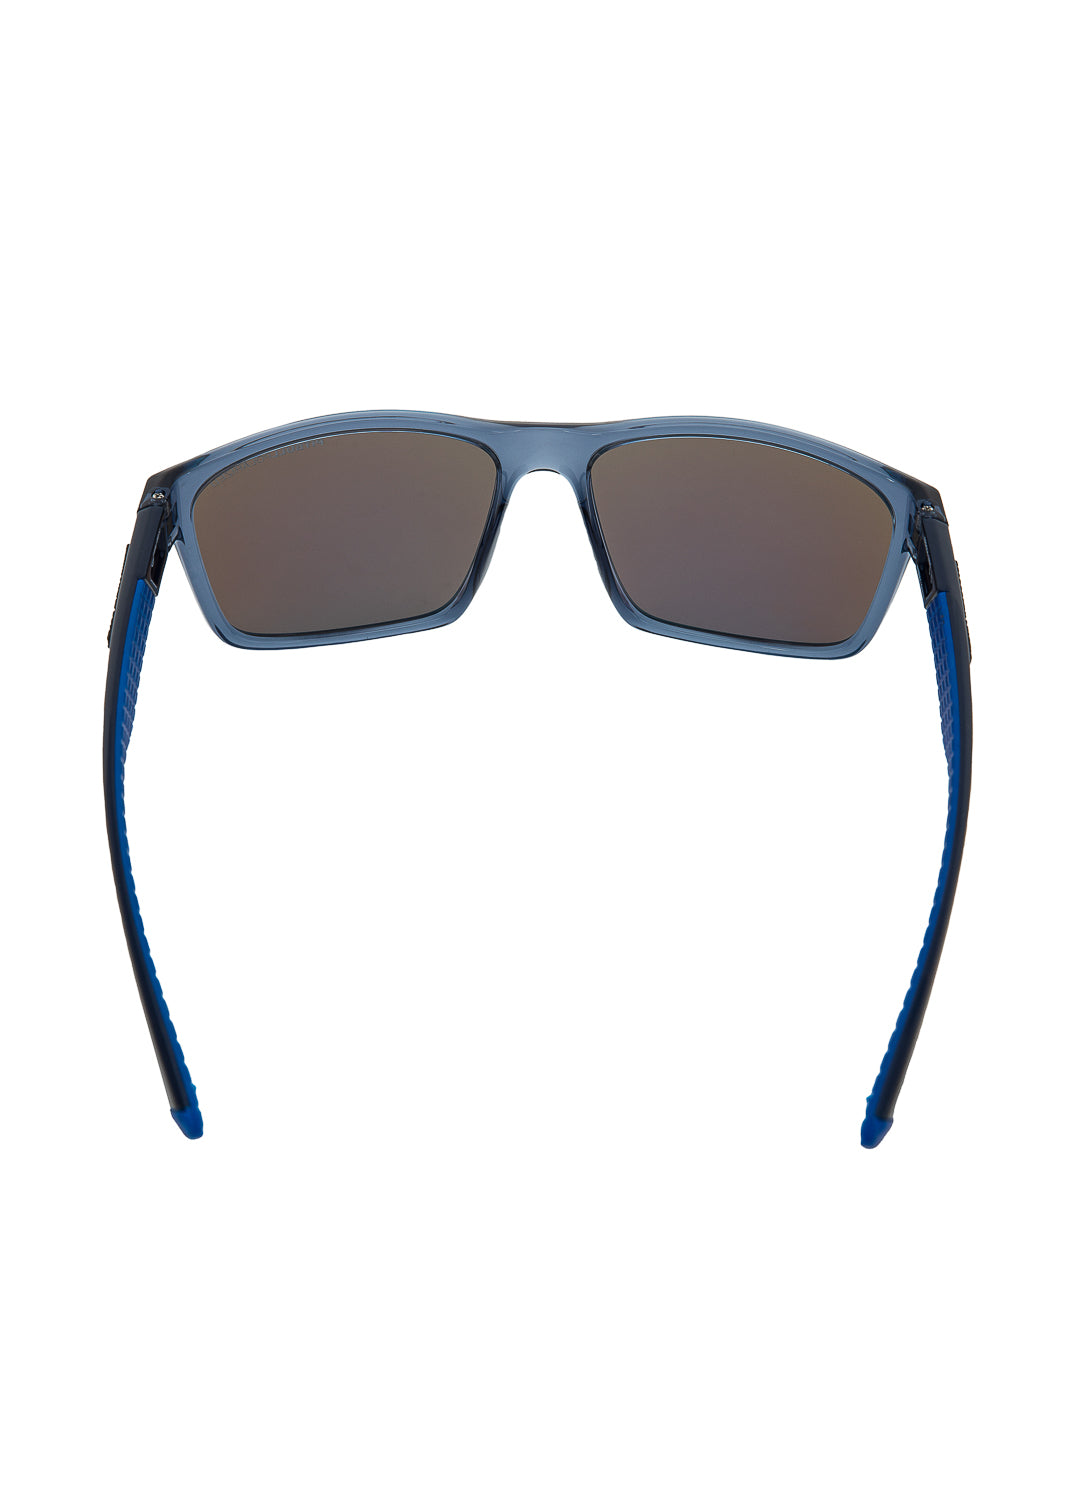 Sunglasses SANTEE Grey/Blue - Pitbull West Coast International Store 